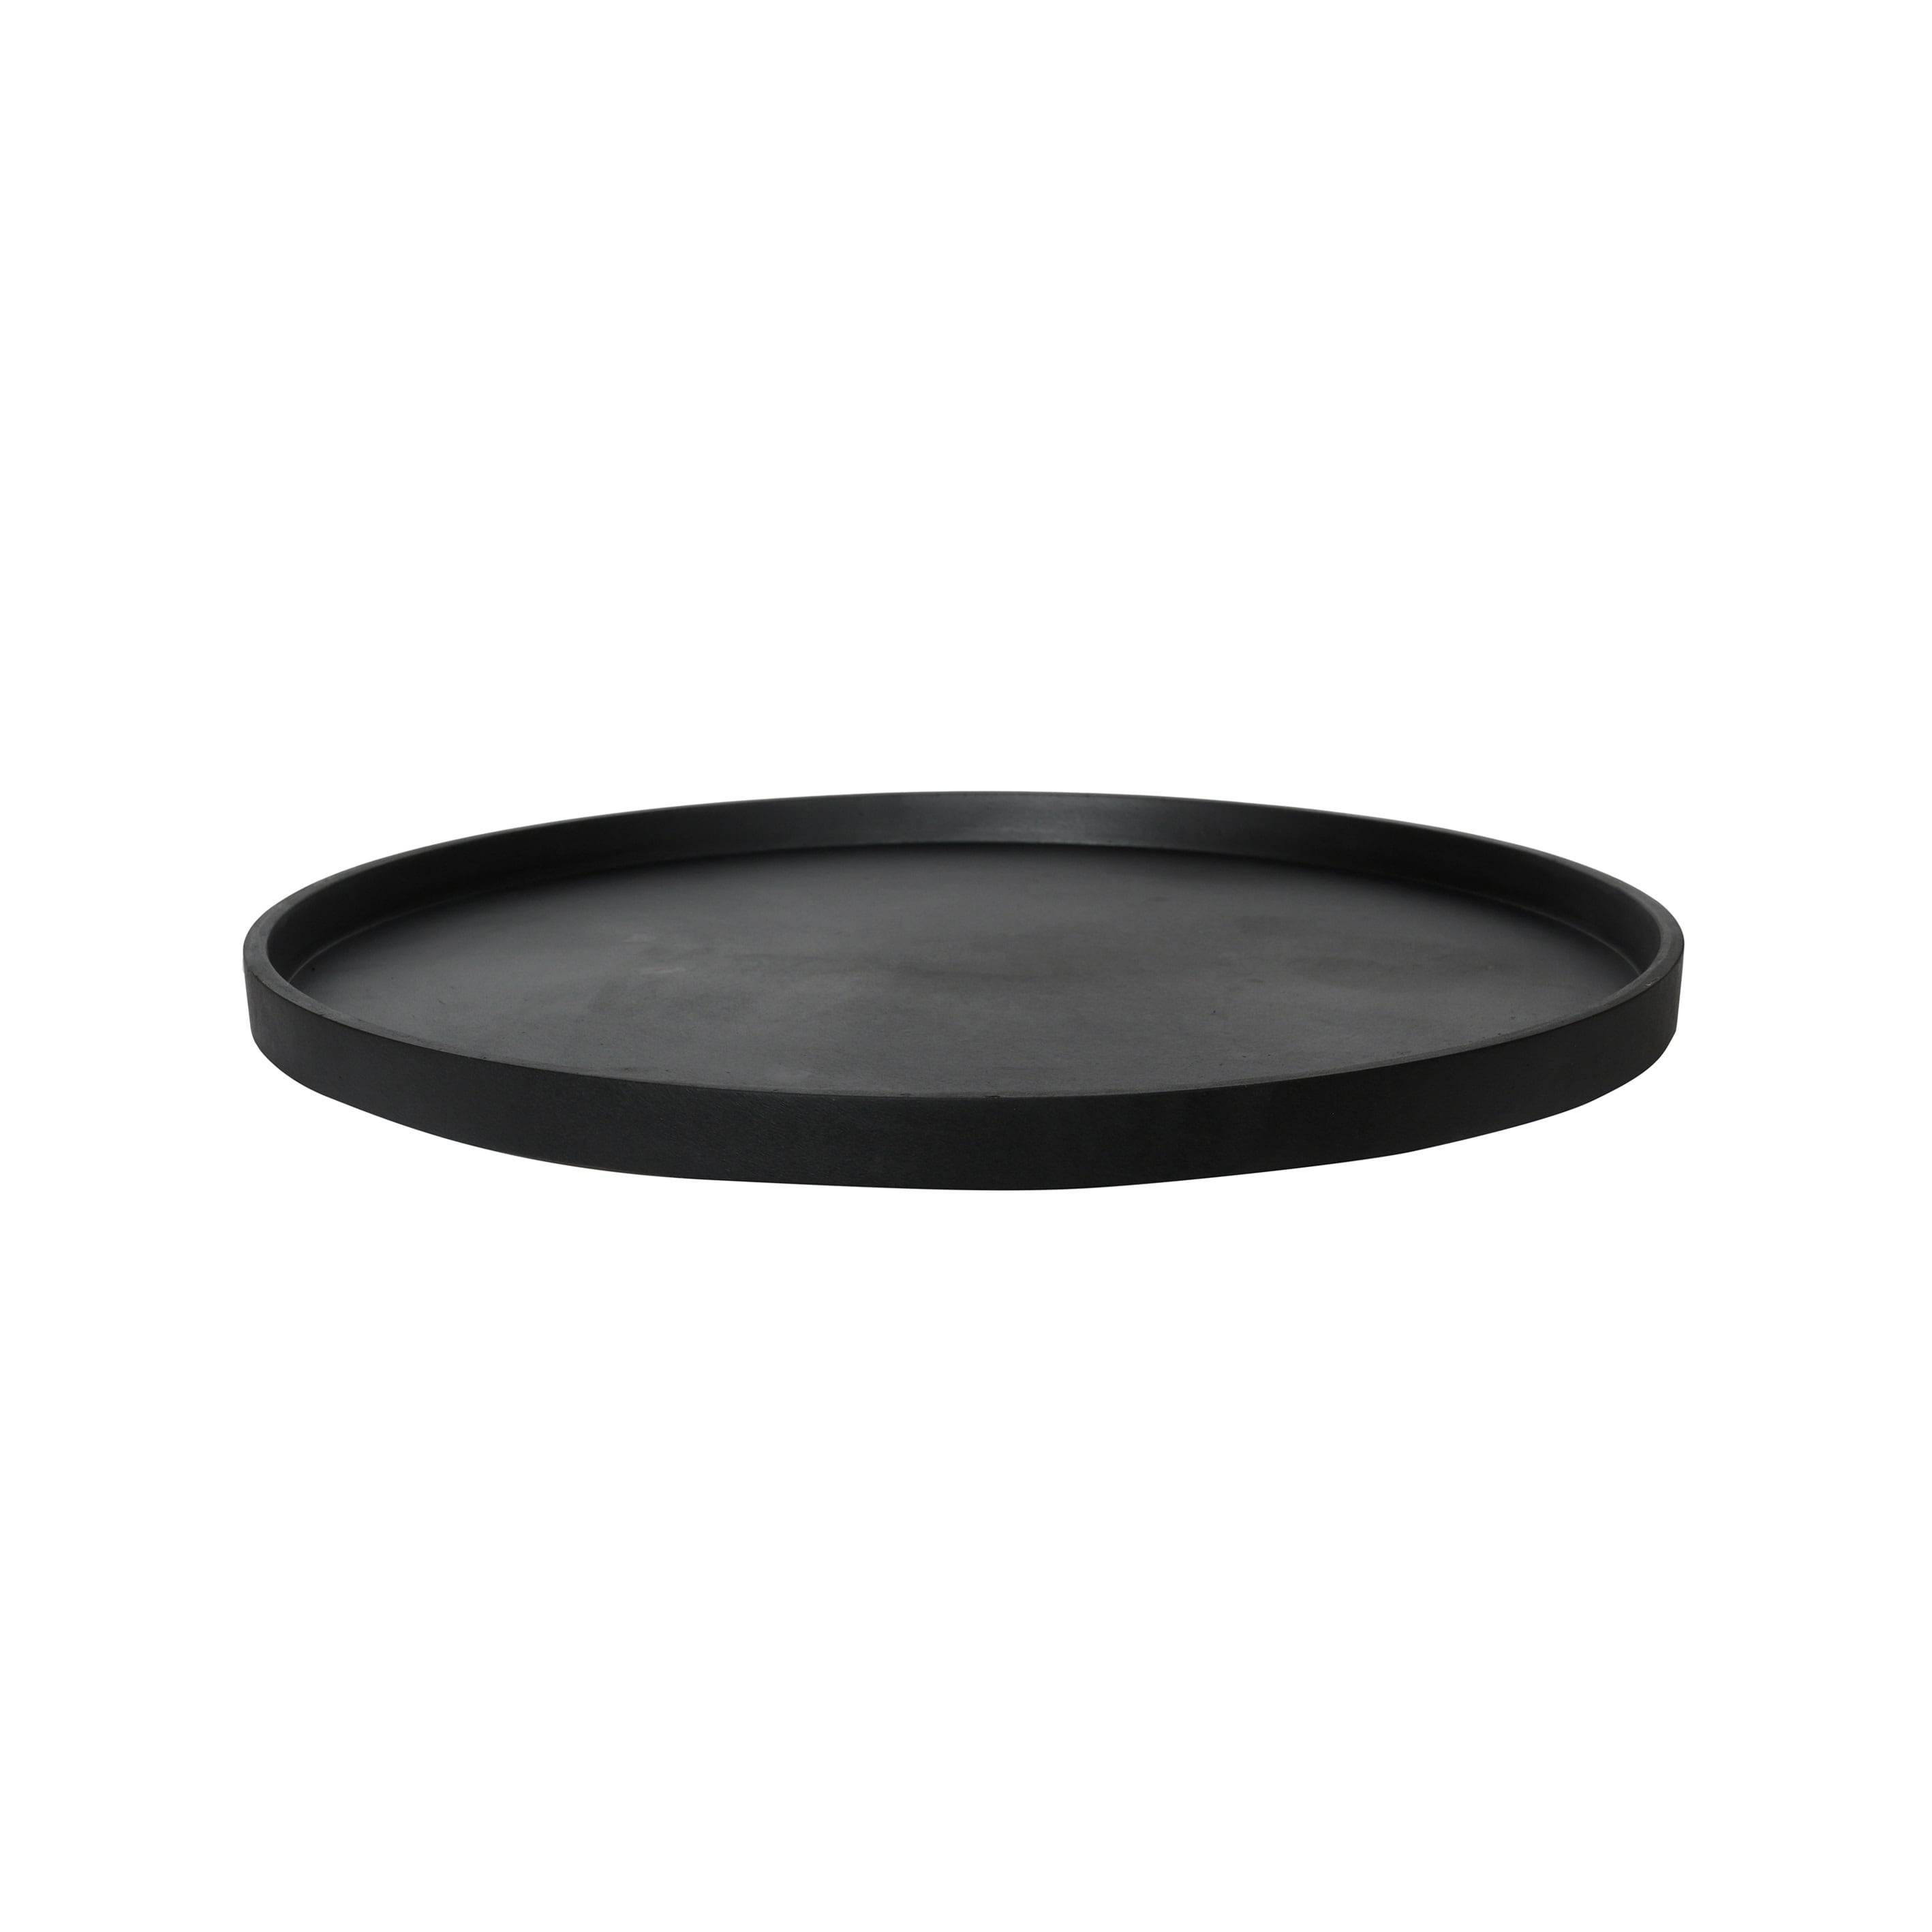 1 square saucer 25 litre black plastic saucer